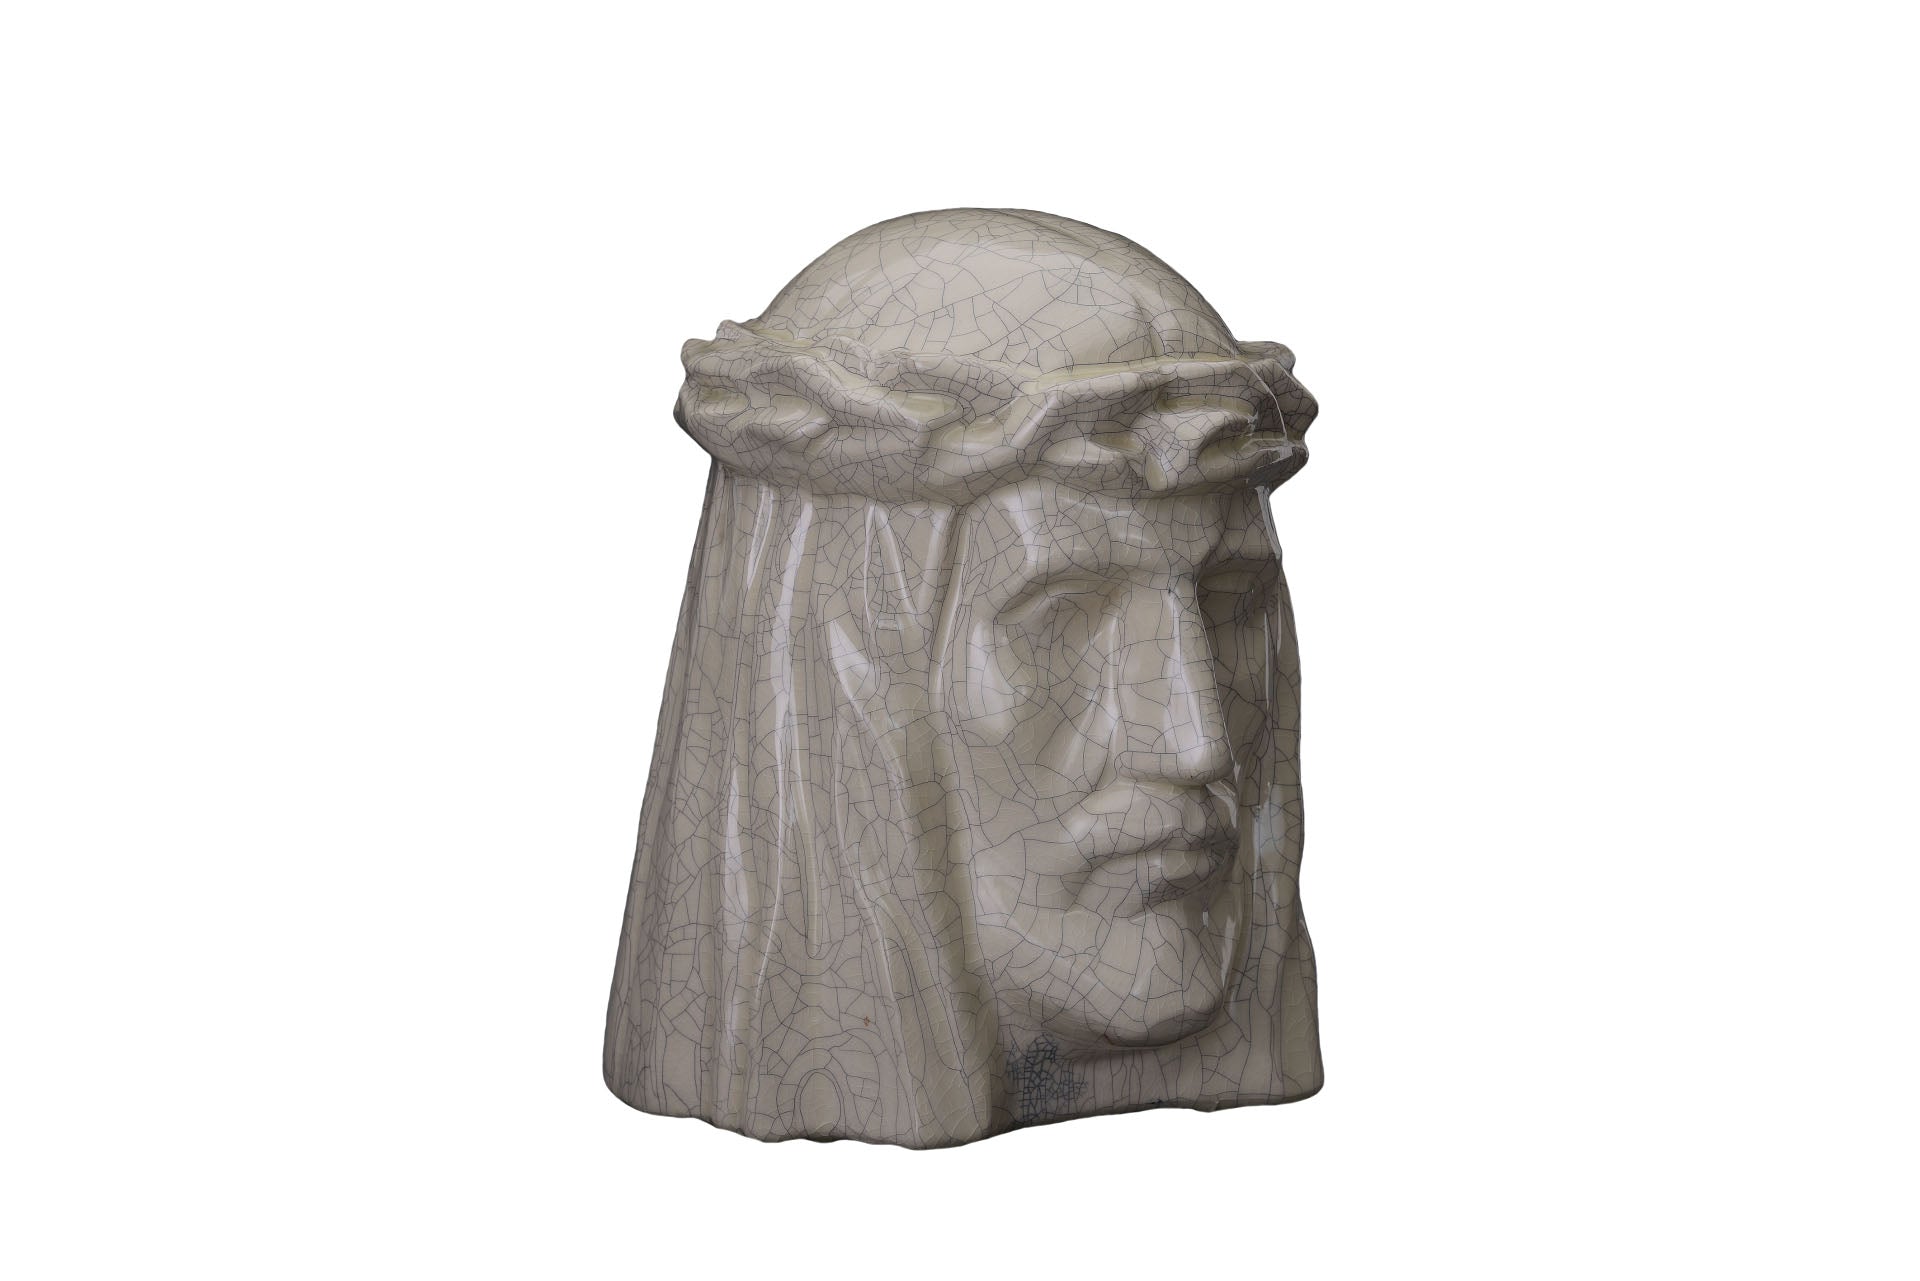 Urn Christ ceramic